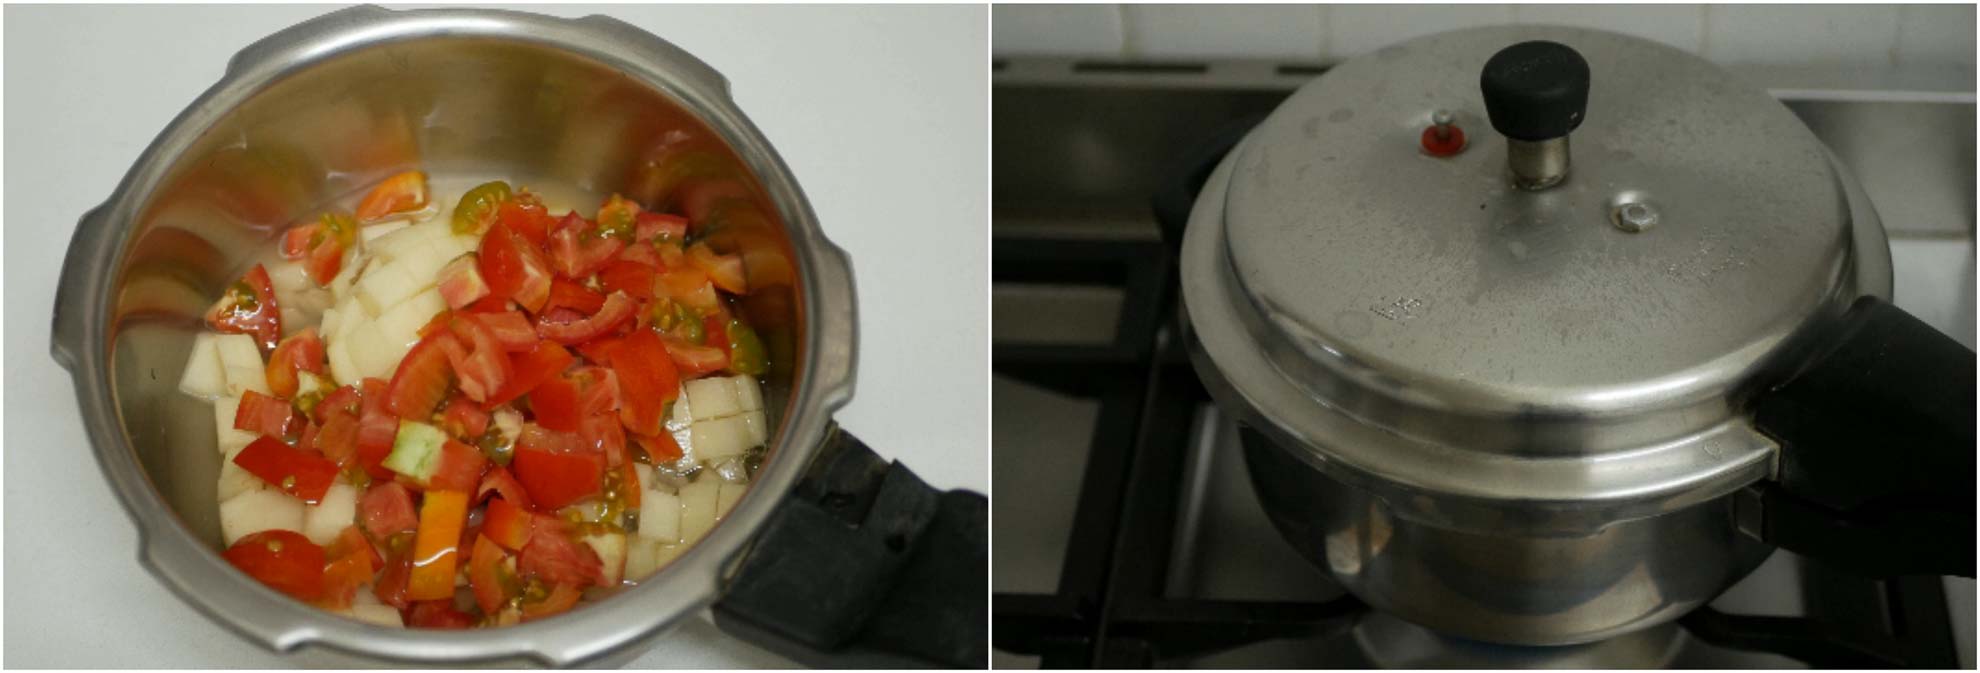 kerala-mutton-stew-recipe-for-appam-3